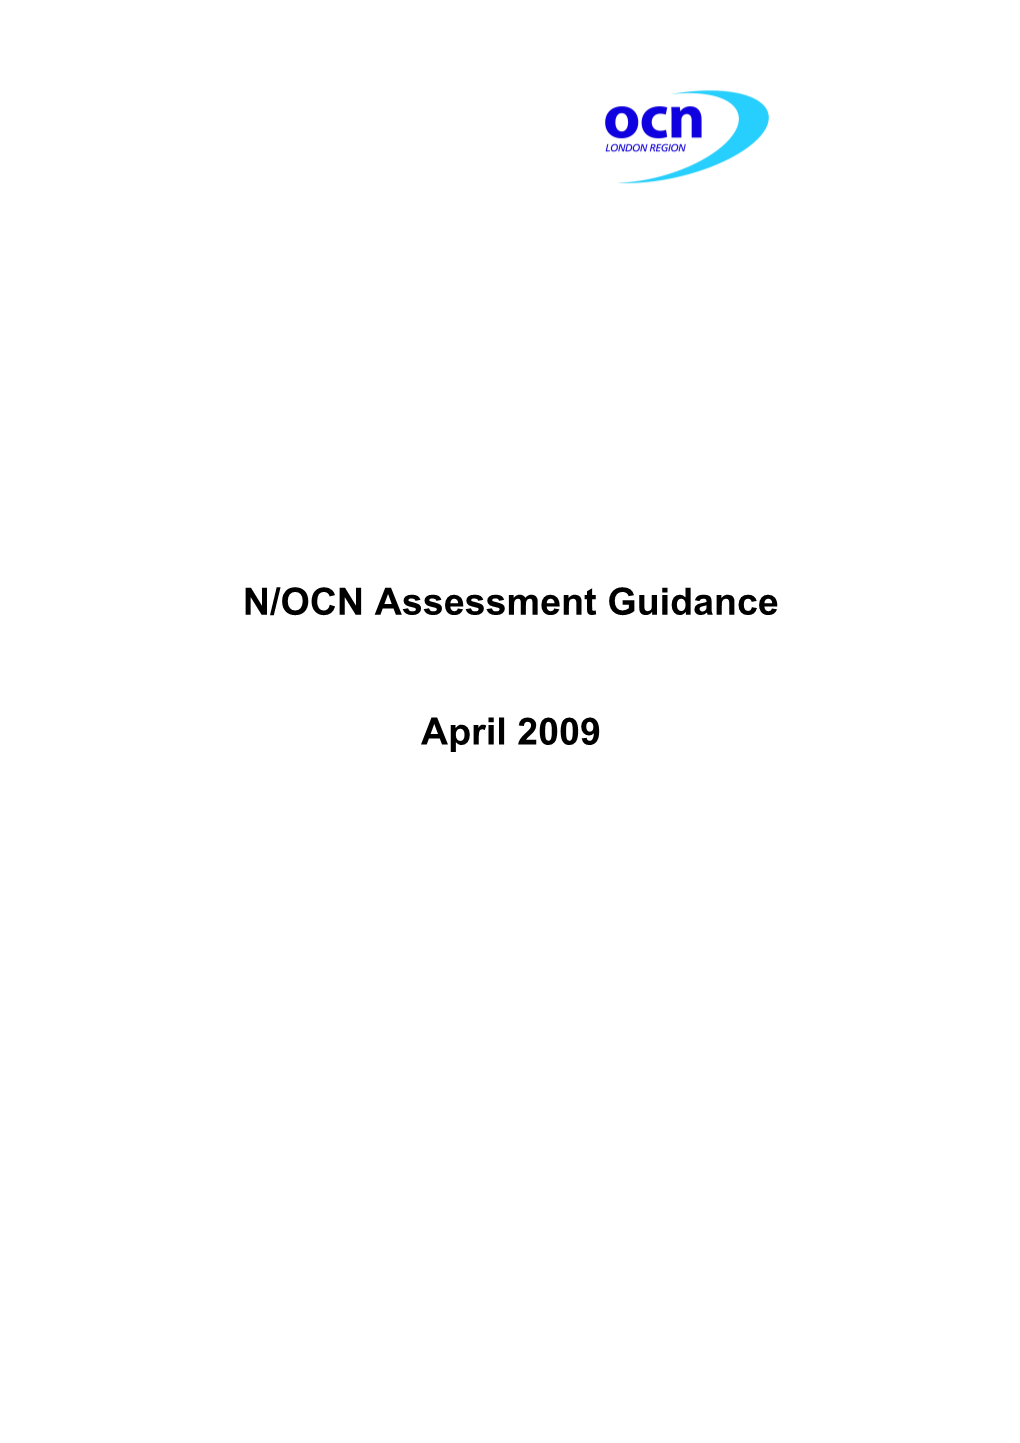 1. N/OCN Requirements for Assessment Methods